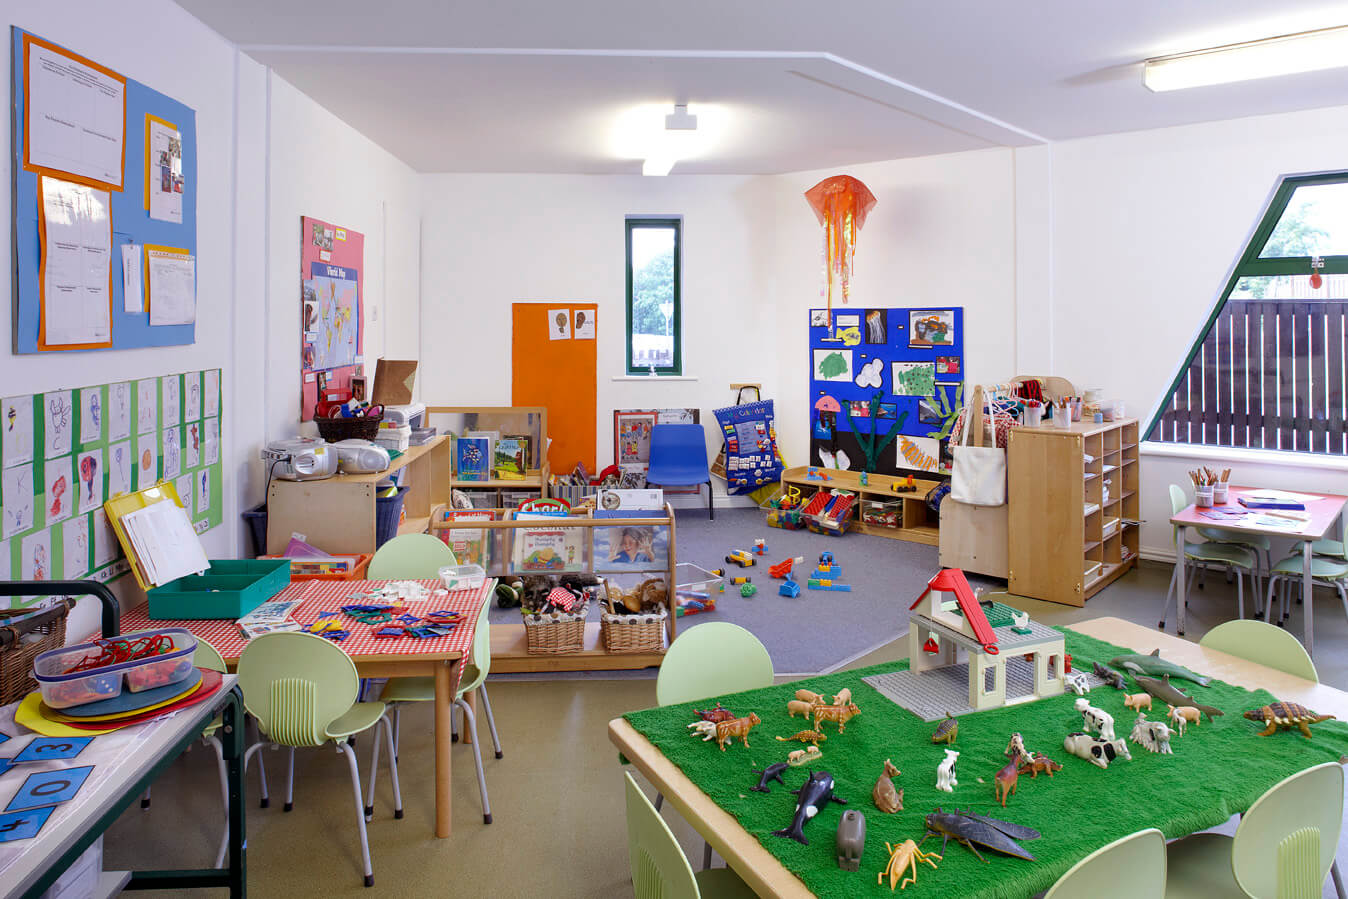 Countess nursery and preschool room